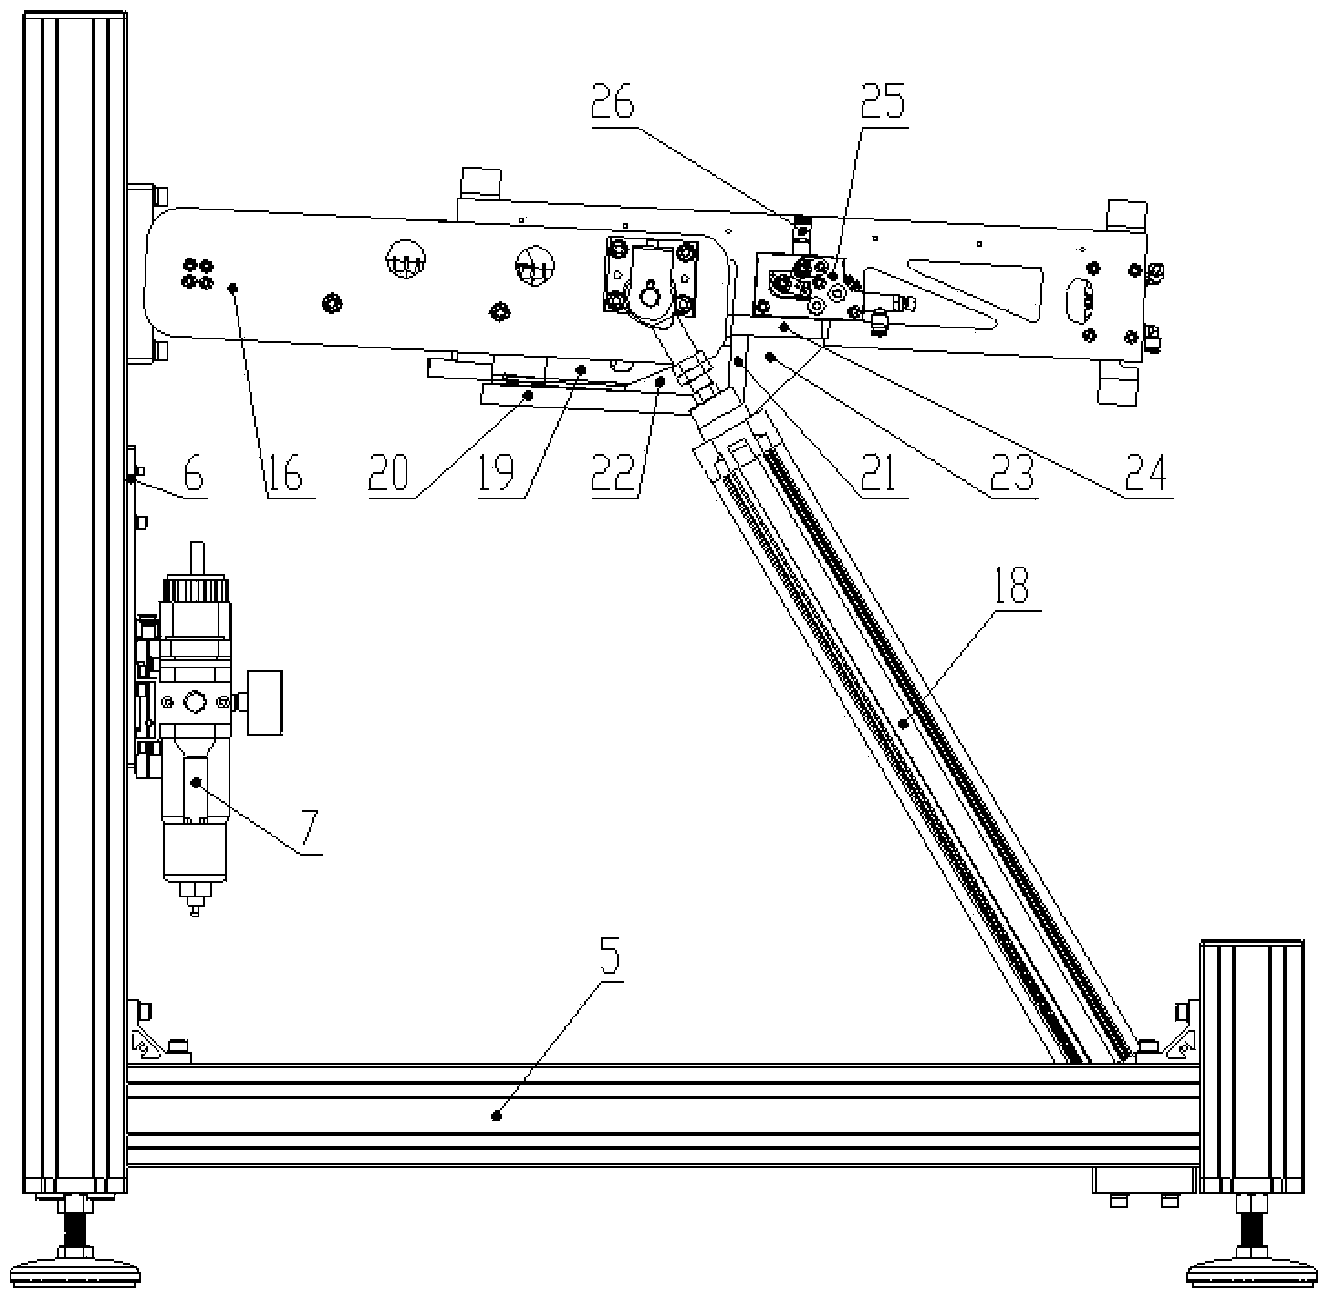 Turnover mechanism used for transmission line